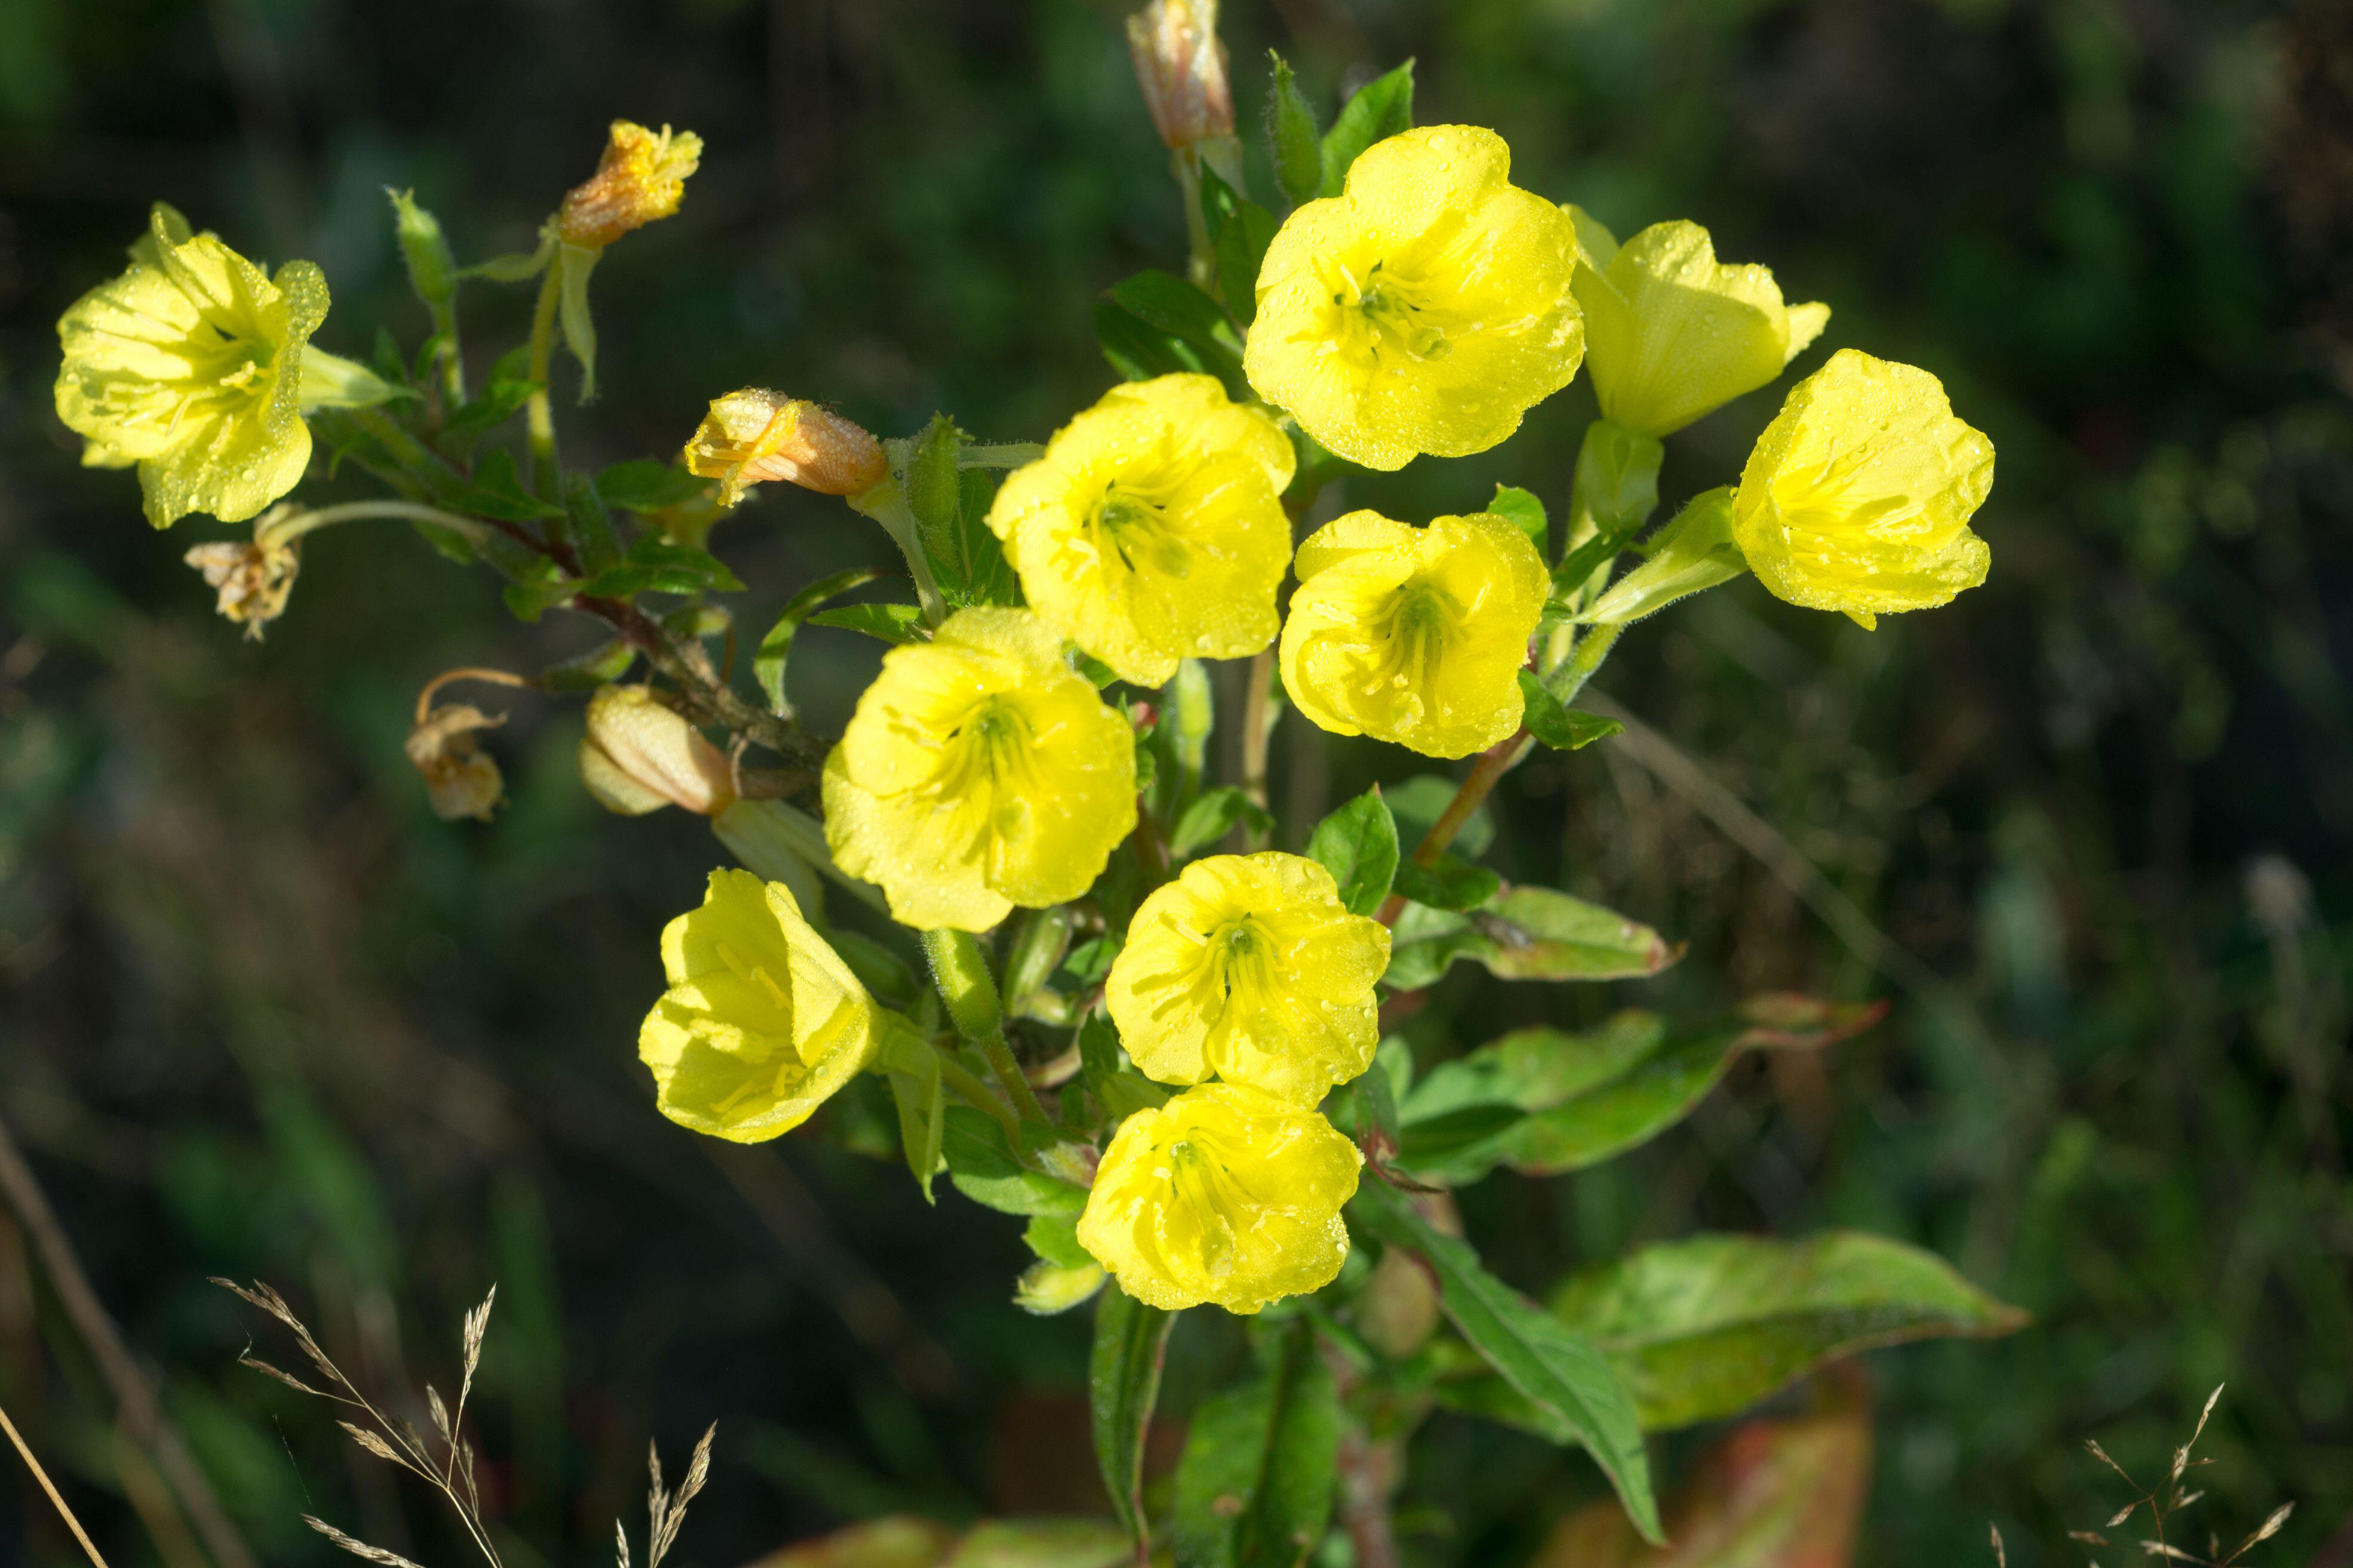 Common evening primrose (Alamy/PA)